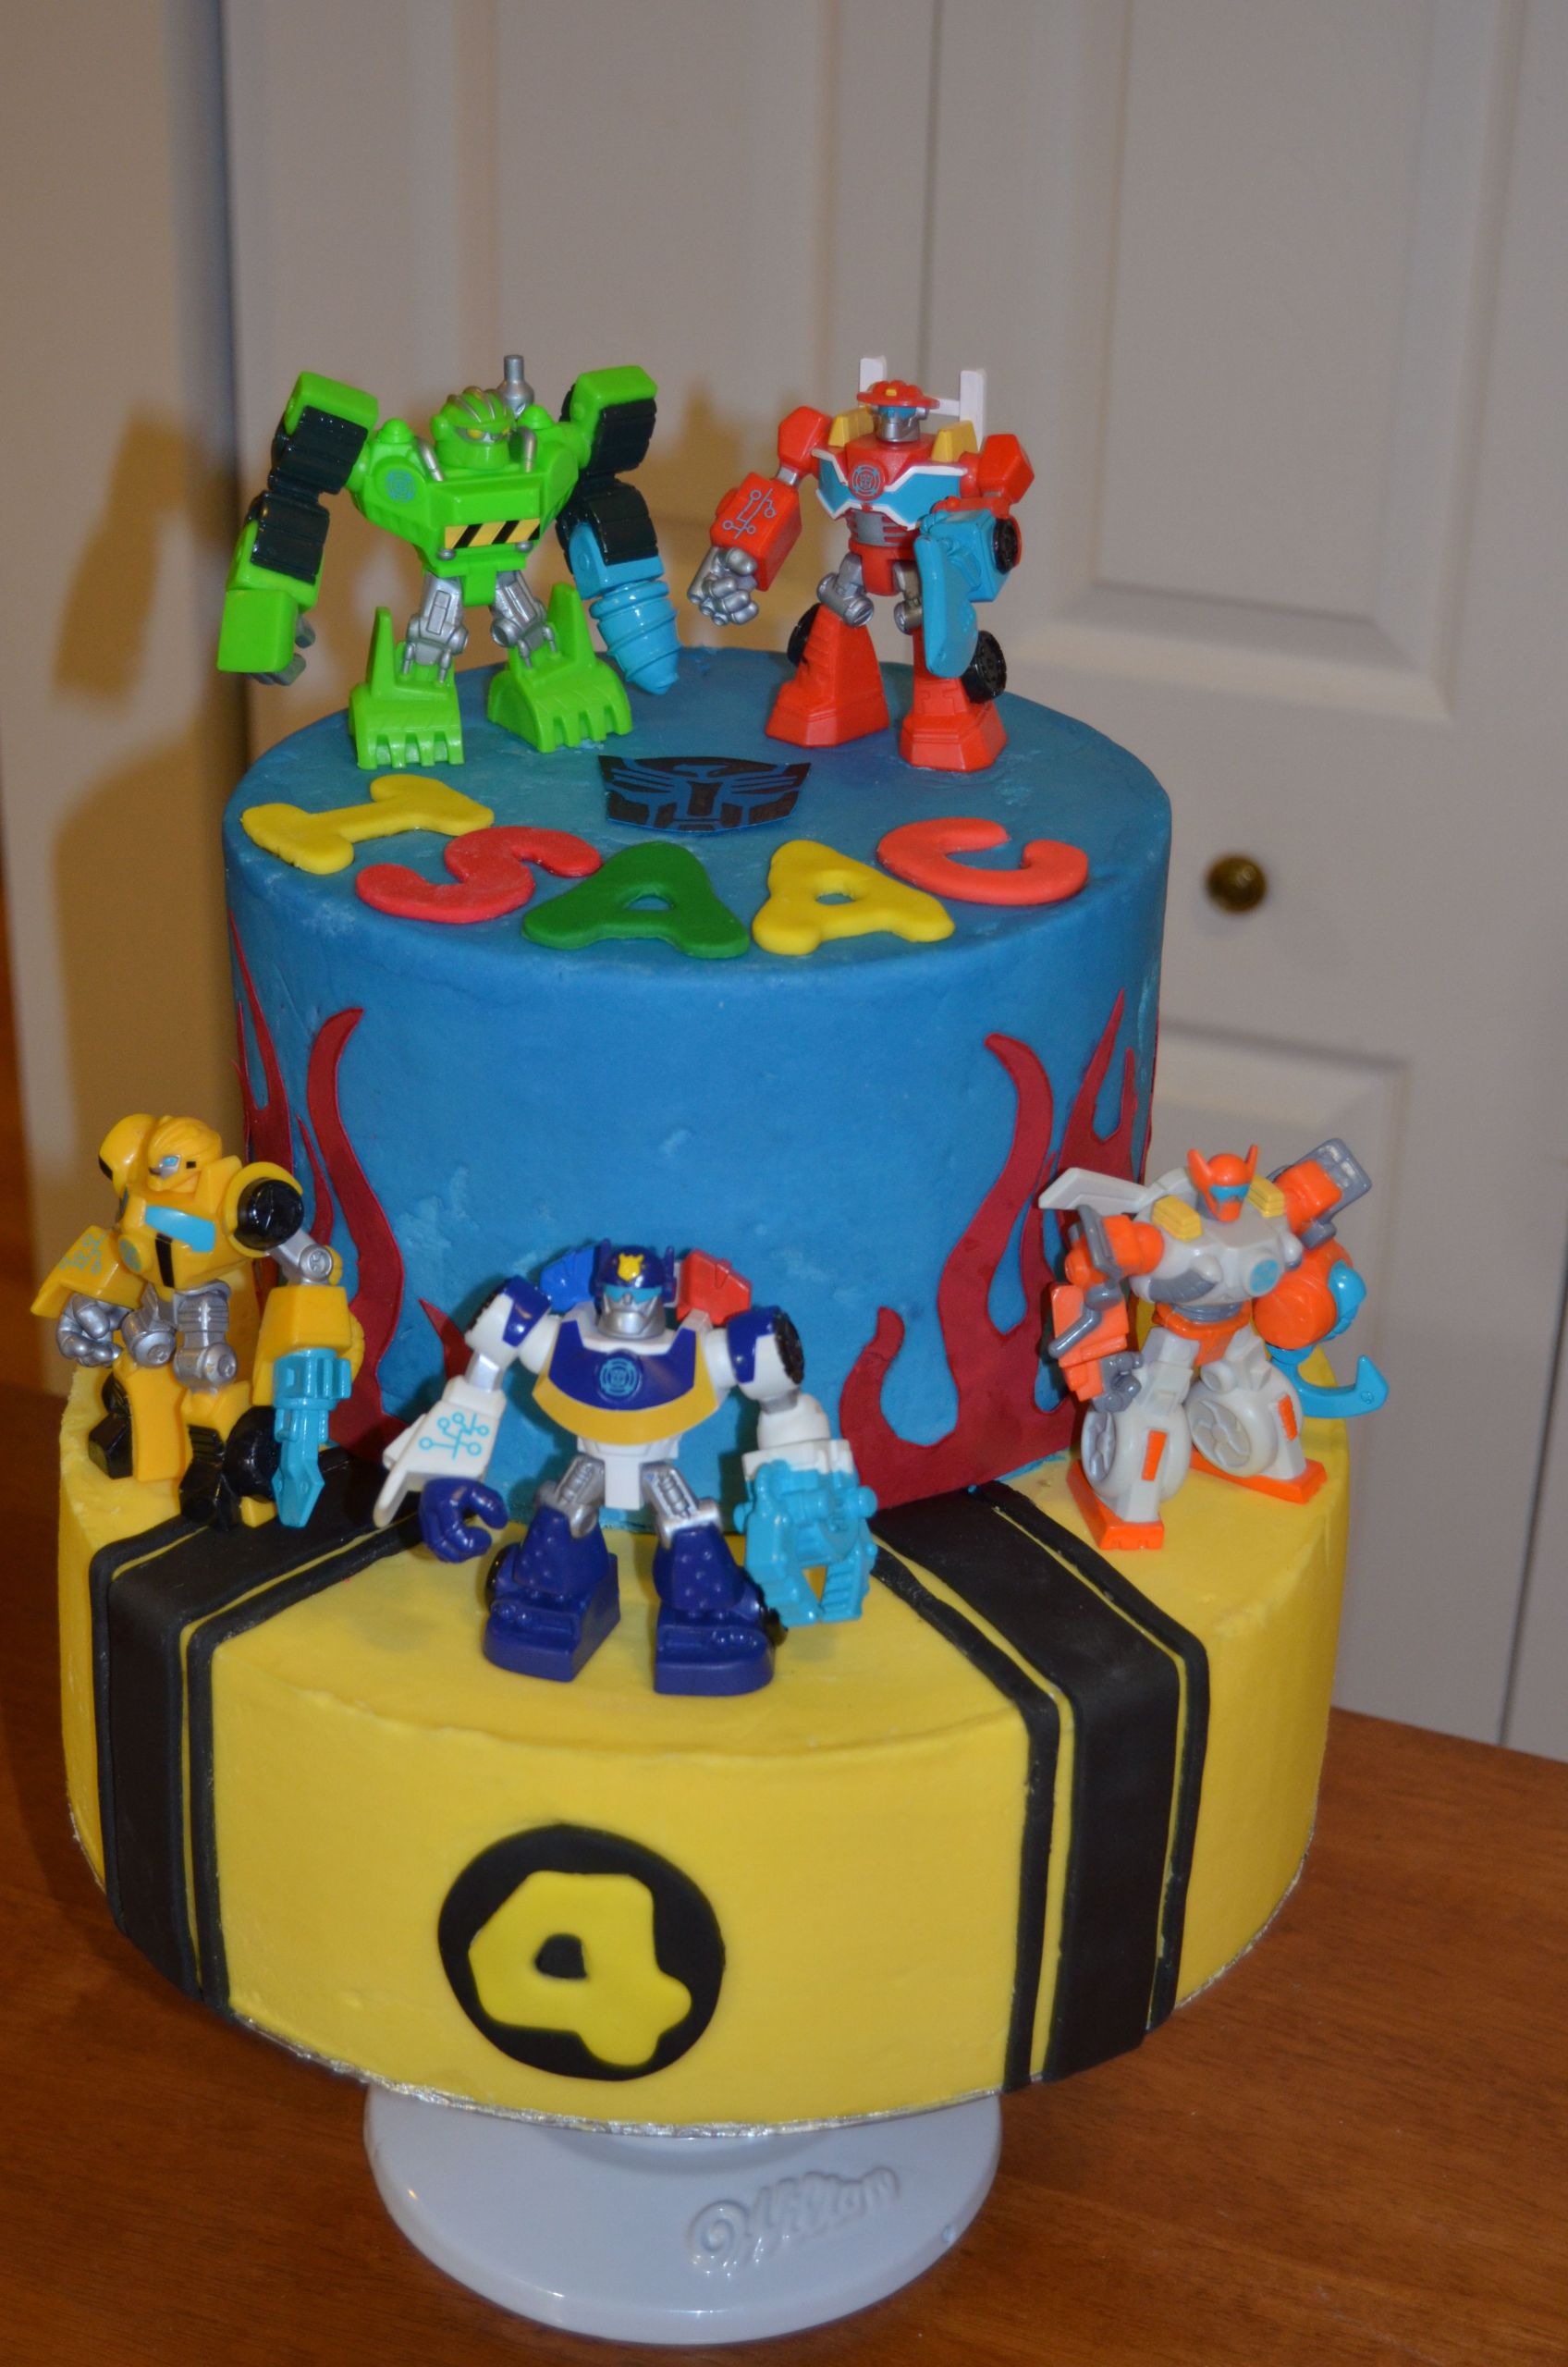 Rescue Bots Birthday Cake
 Transformers Rescue Bots cake